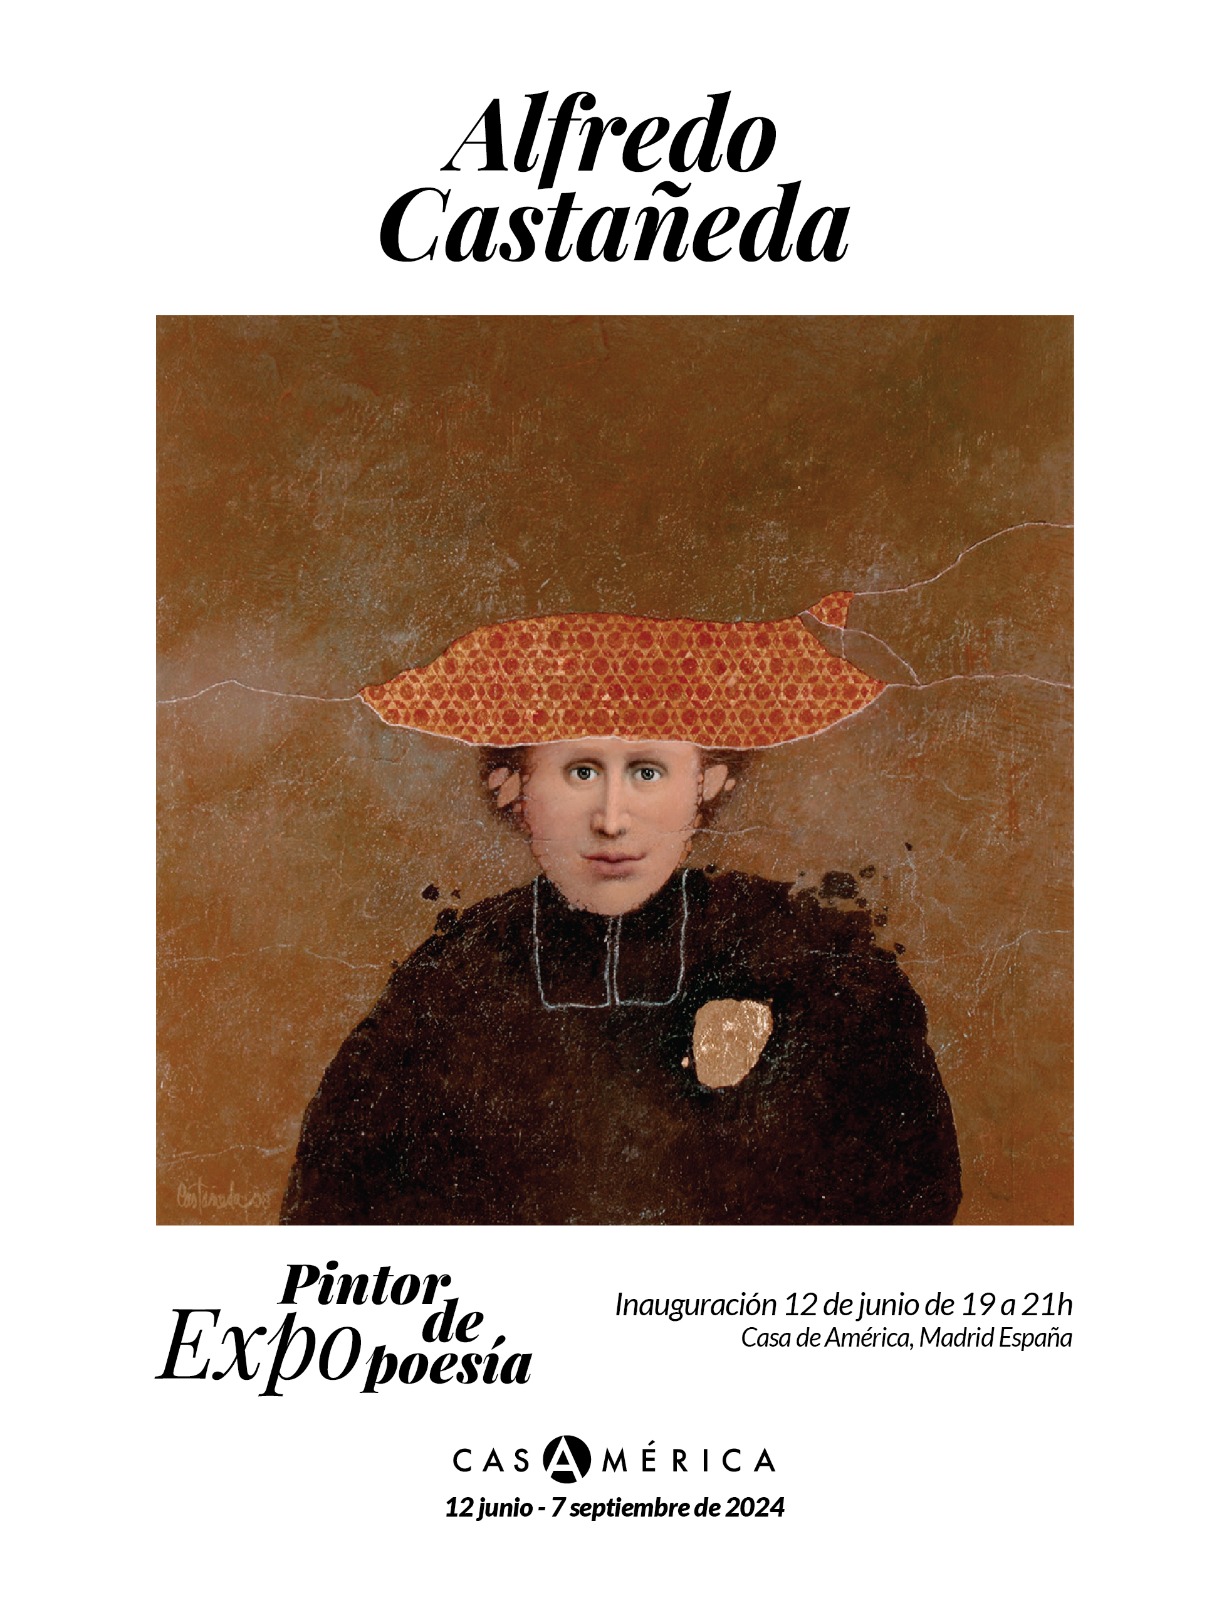 "Alfredo Castañeda, poetry painter" opens on June 12th at Casa de América